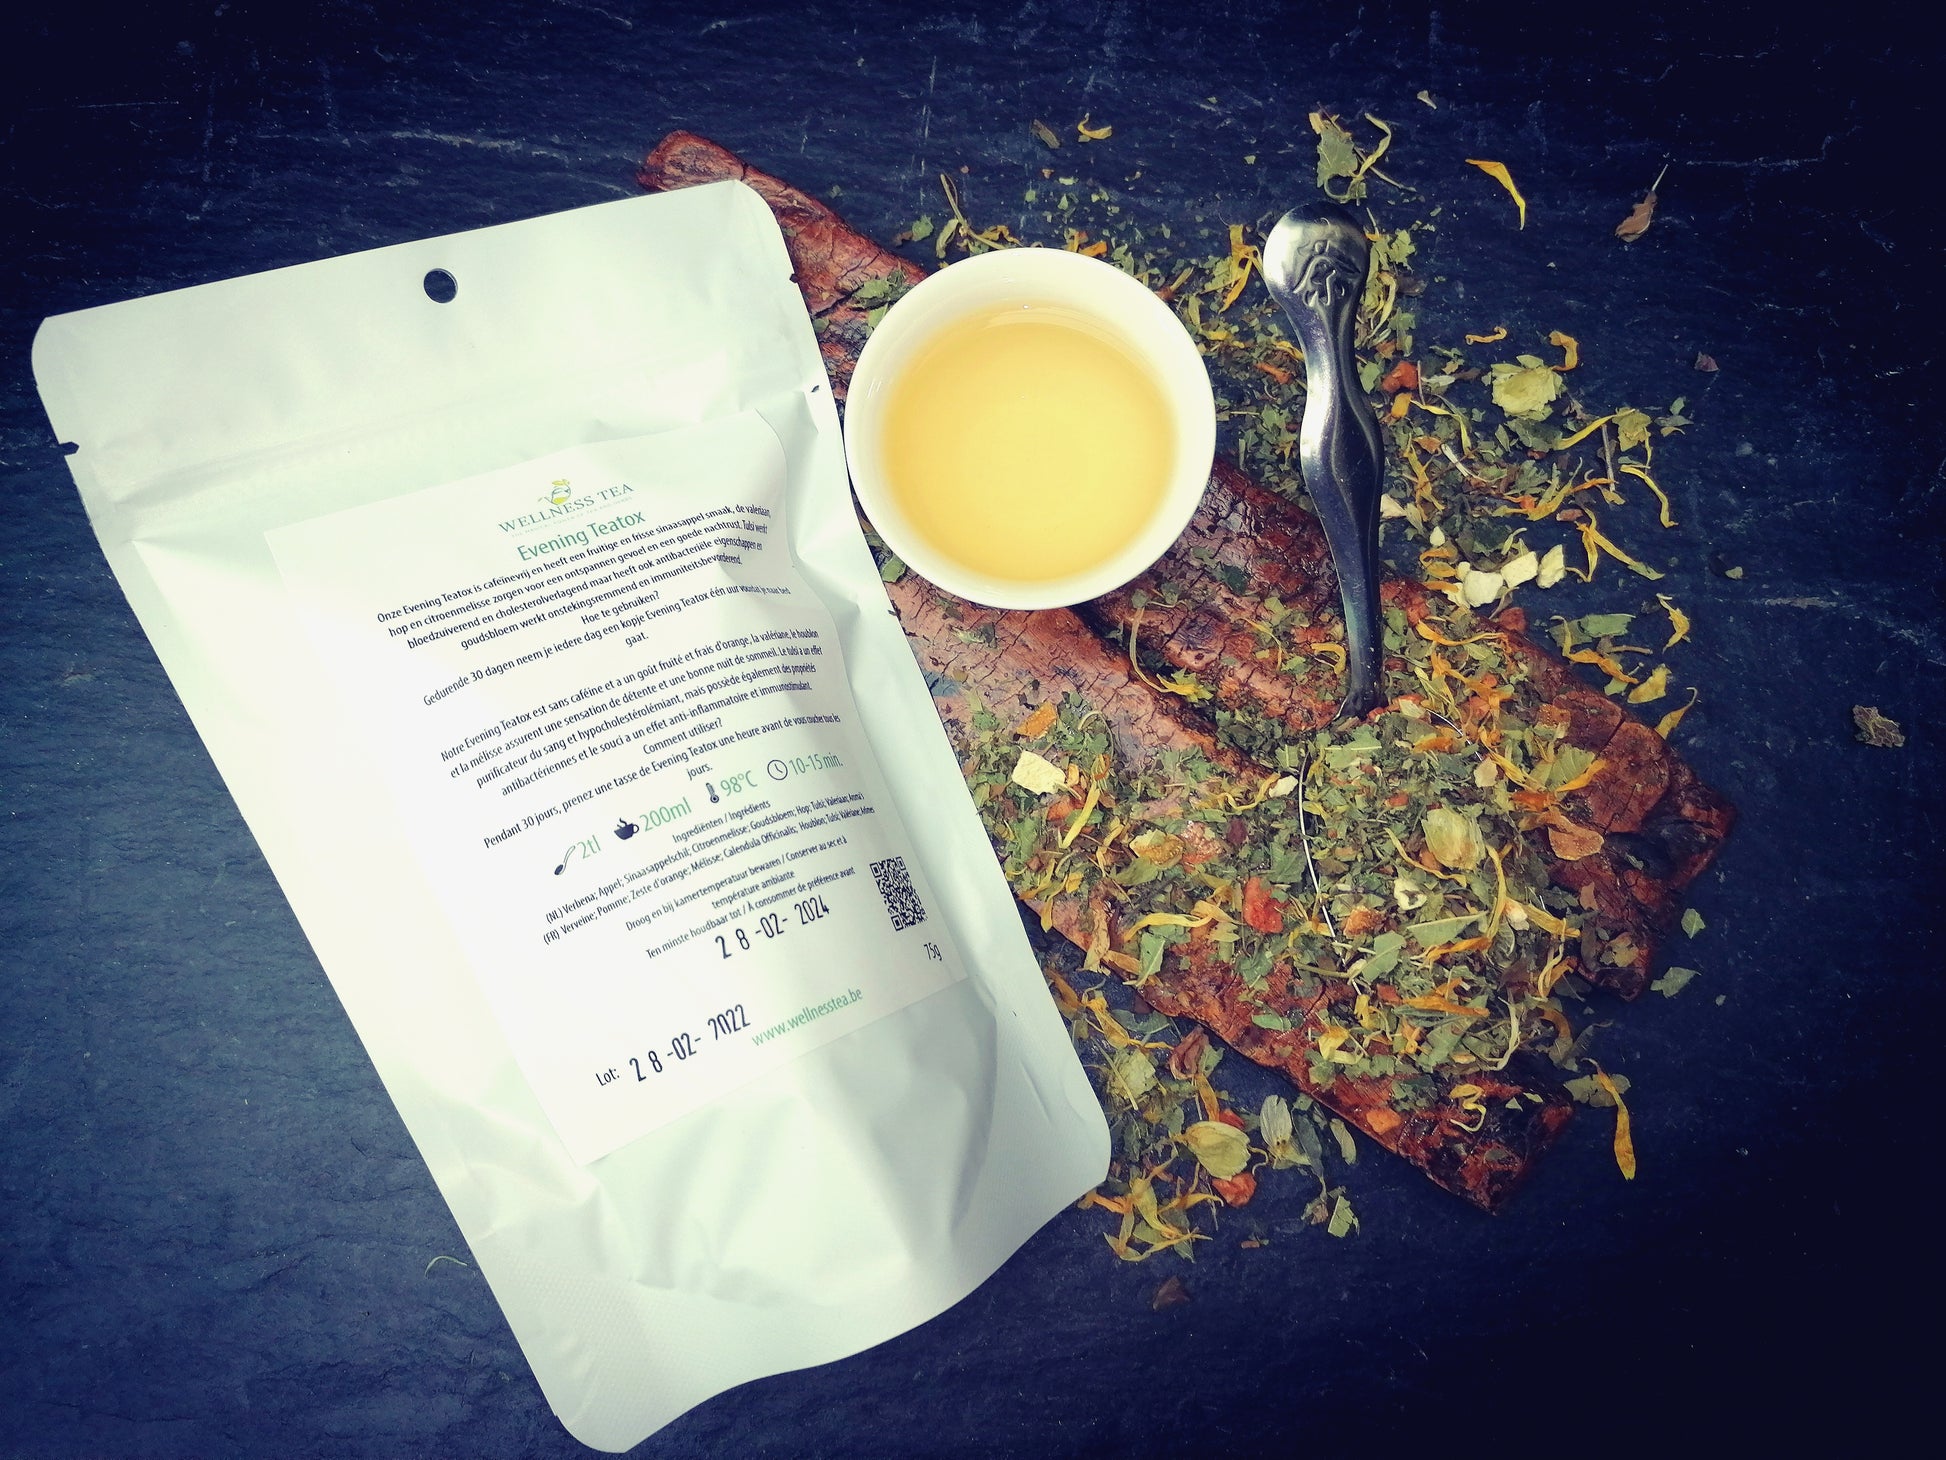 Evening Teatox herbal tea package and liquor